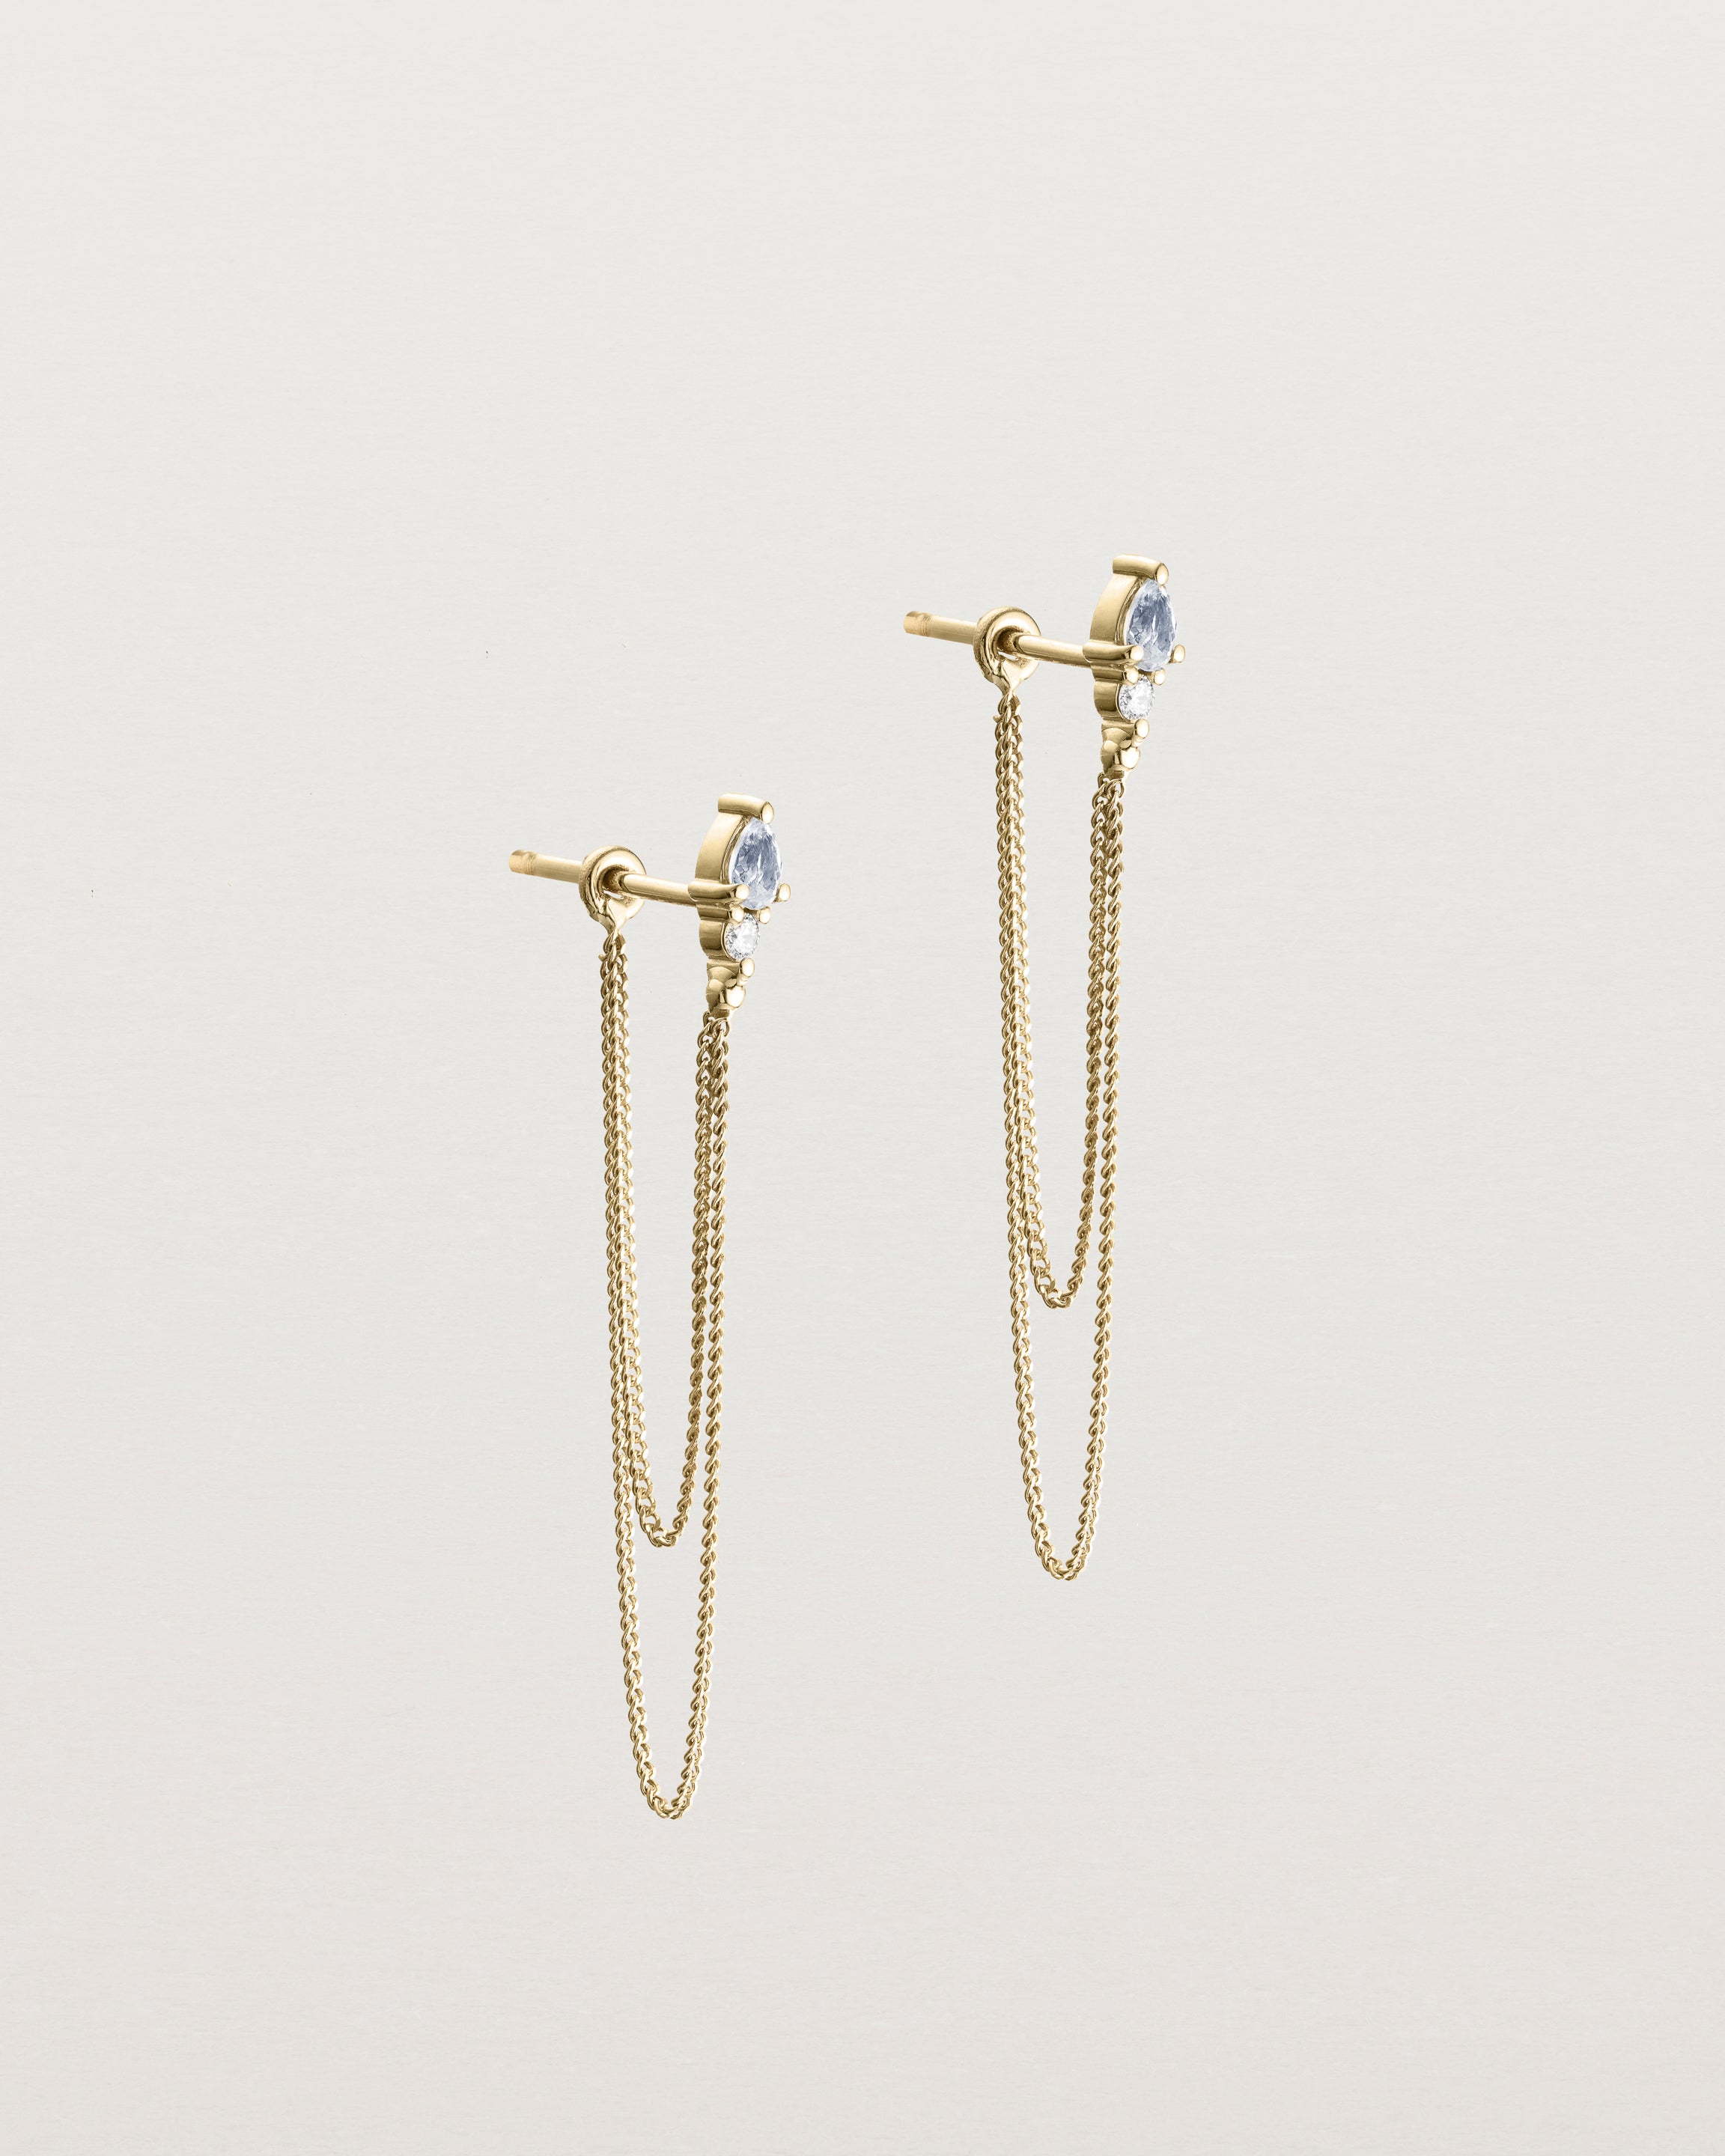 A pair of the Danaë Loop Studs | Sapphire & Diamond | Yellow Gold.